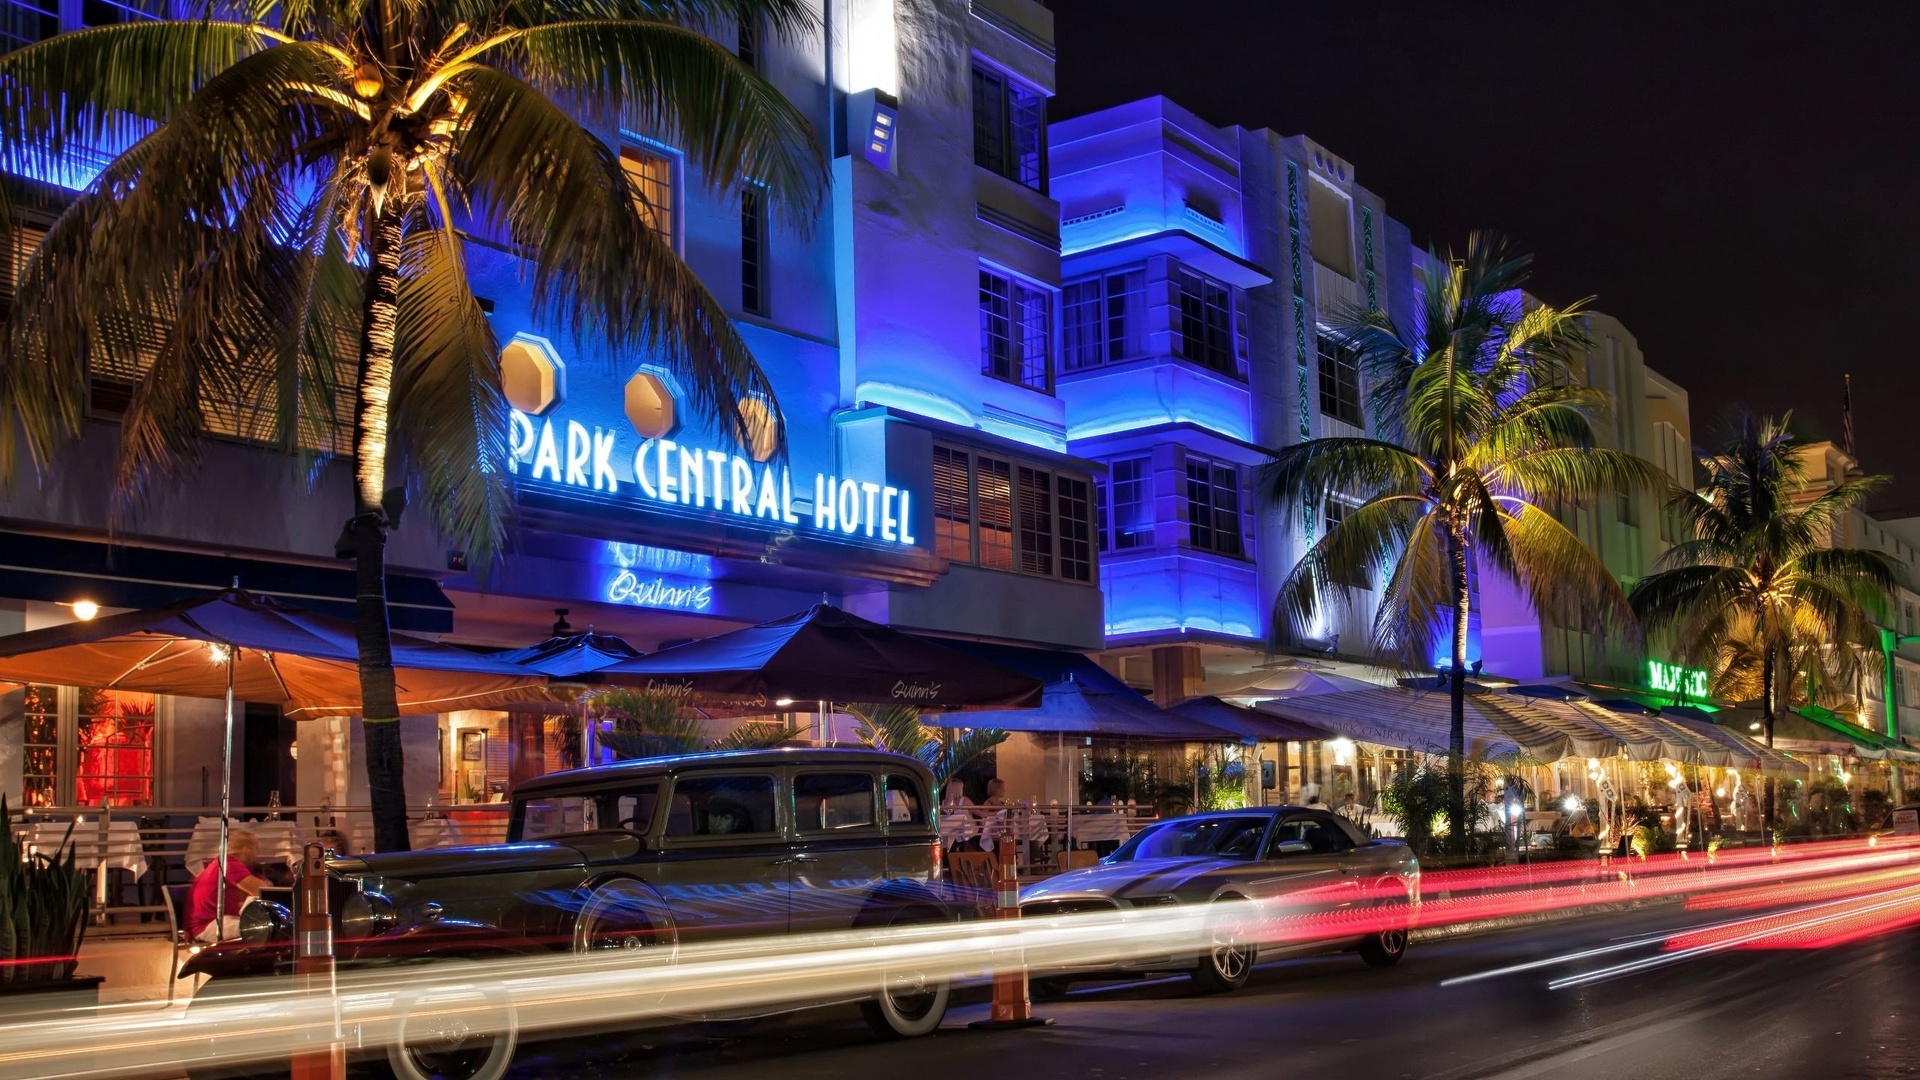 Miami - Hotel Park central - 2560x1440.jpg